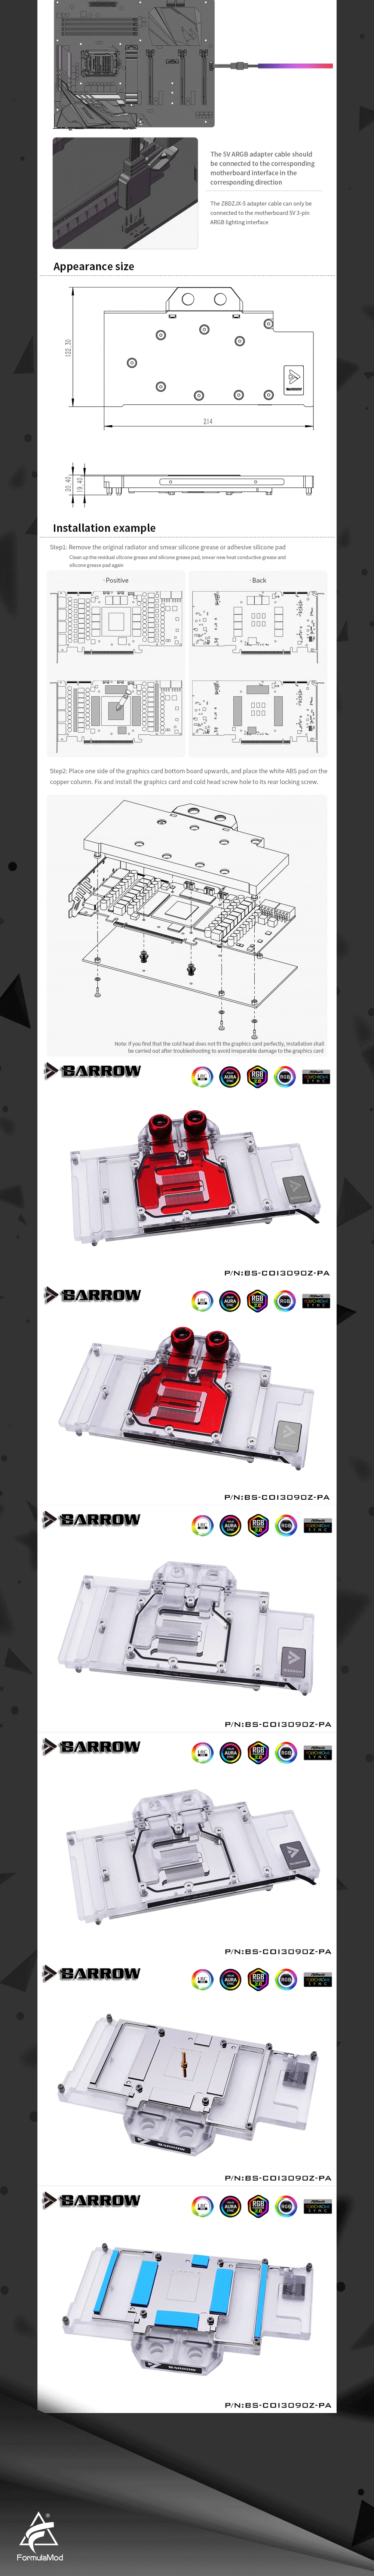 Barrow 3090 3080 GPU Water Block for Colorful BATTLEAX 3090/3080, Full Cover 5v ARGB GPU Cooler, BS-COI3090Z-PA2  